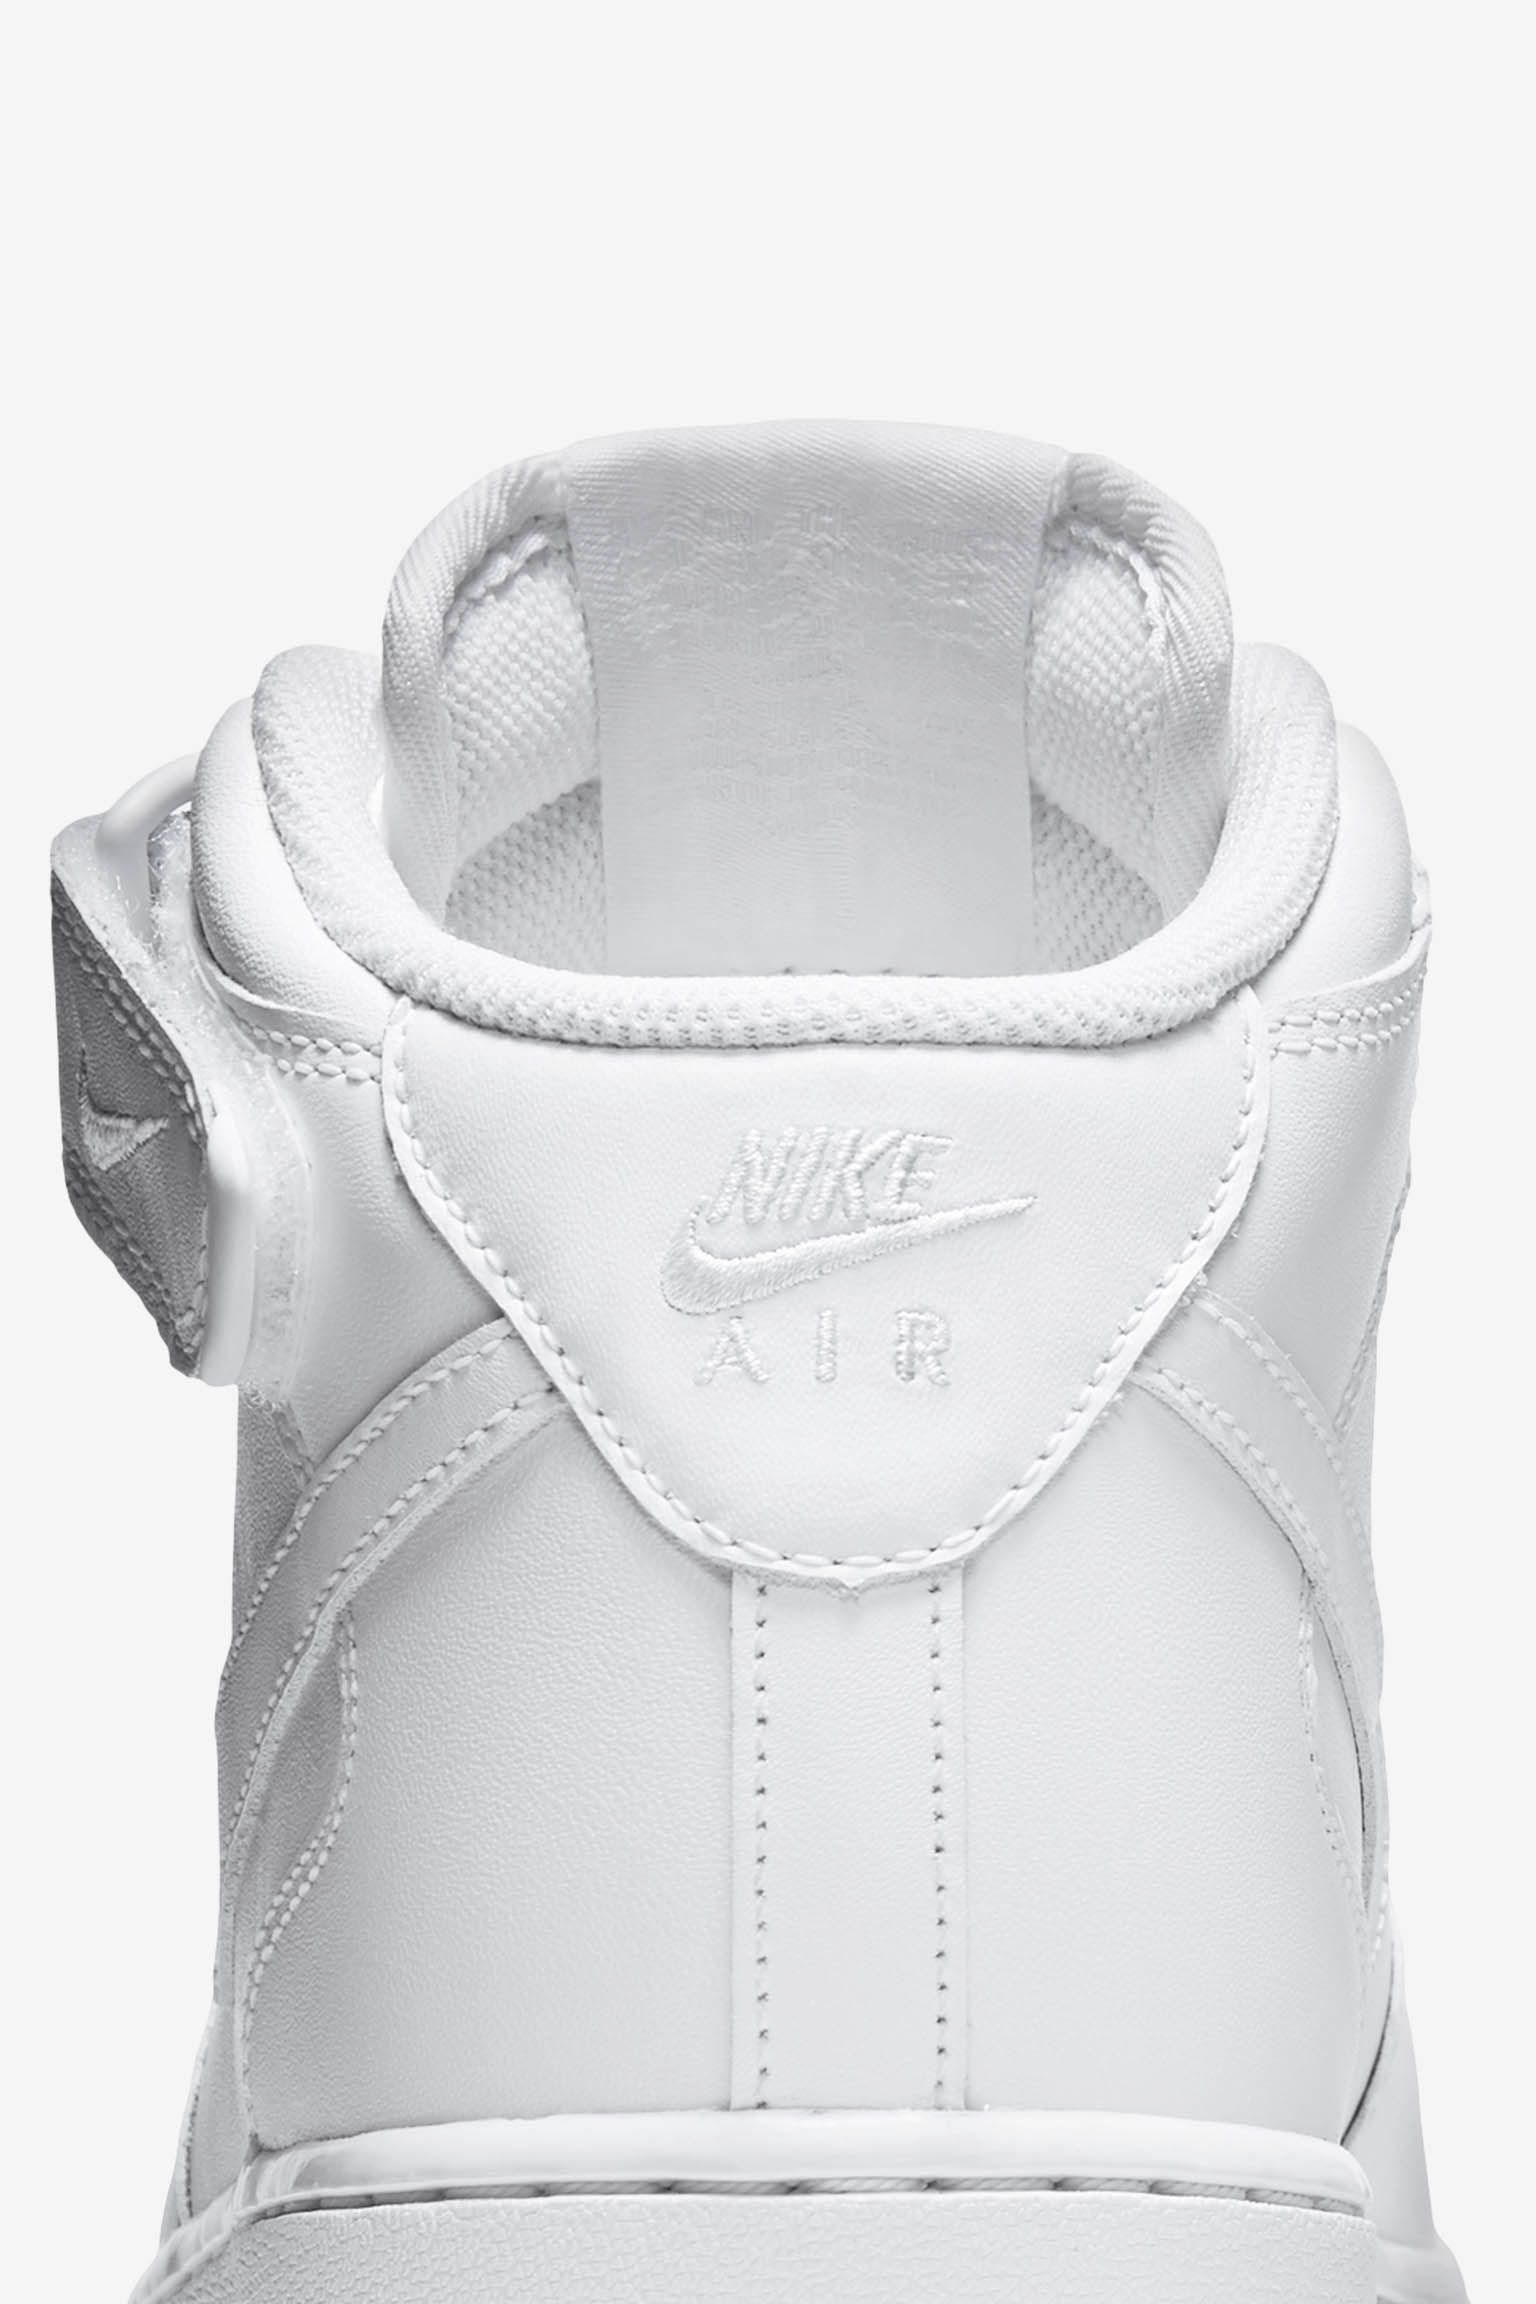 Nike Marxman 'Triple White'. Nike SNKRS